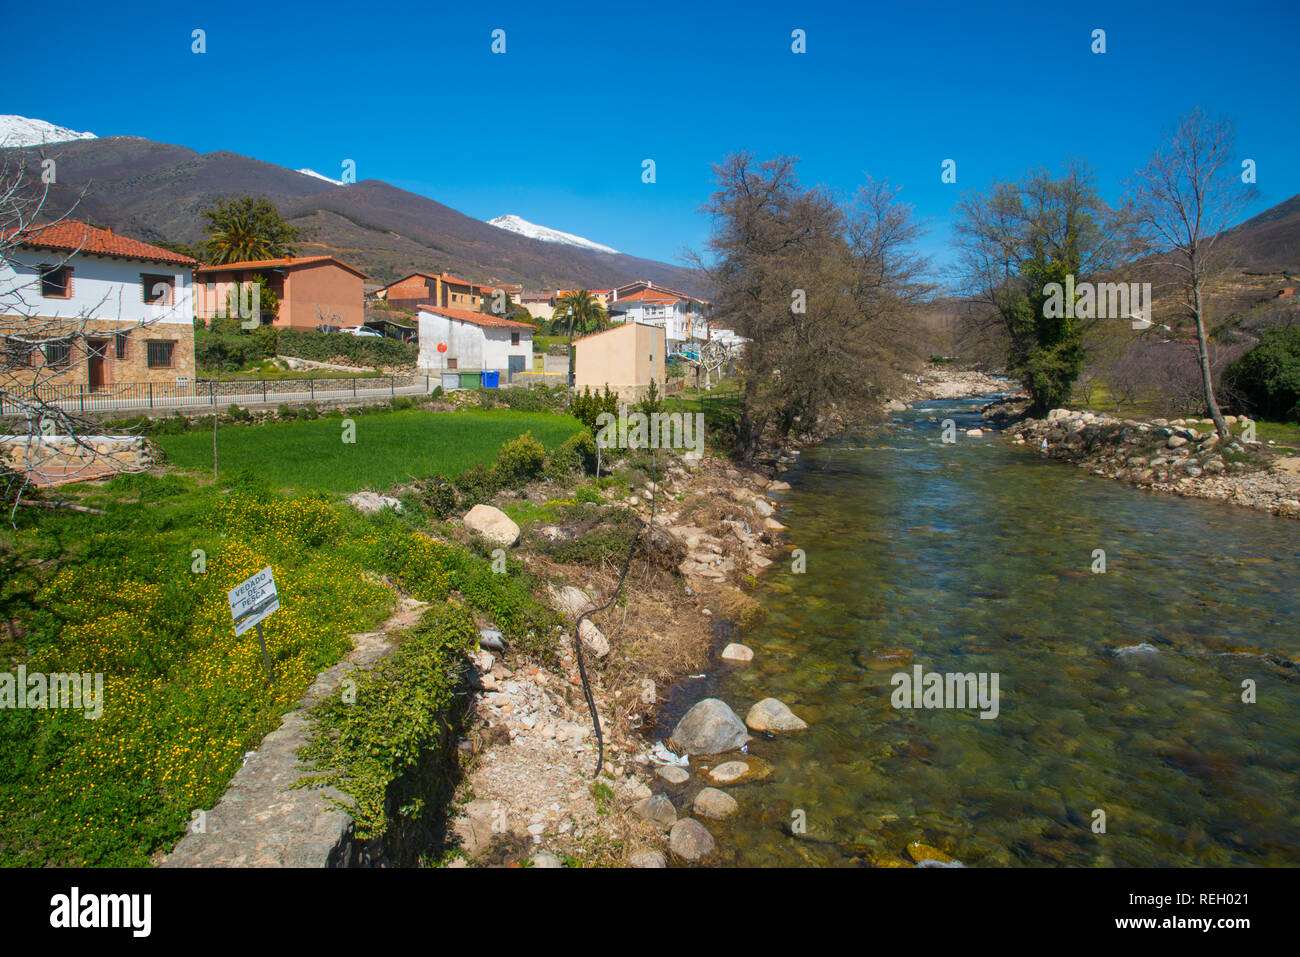 River Jerte. Jerte, Caceres province, Extremadura, Spain. Stock Photo